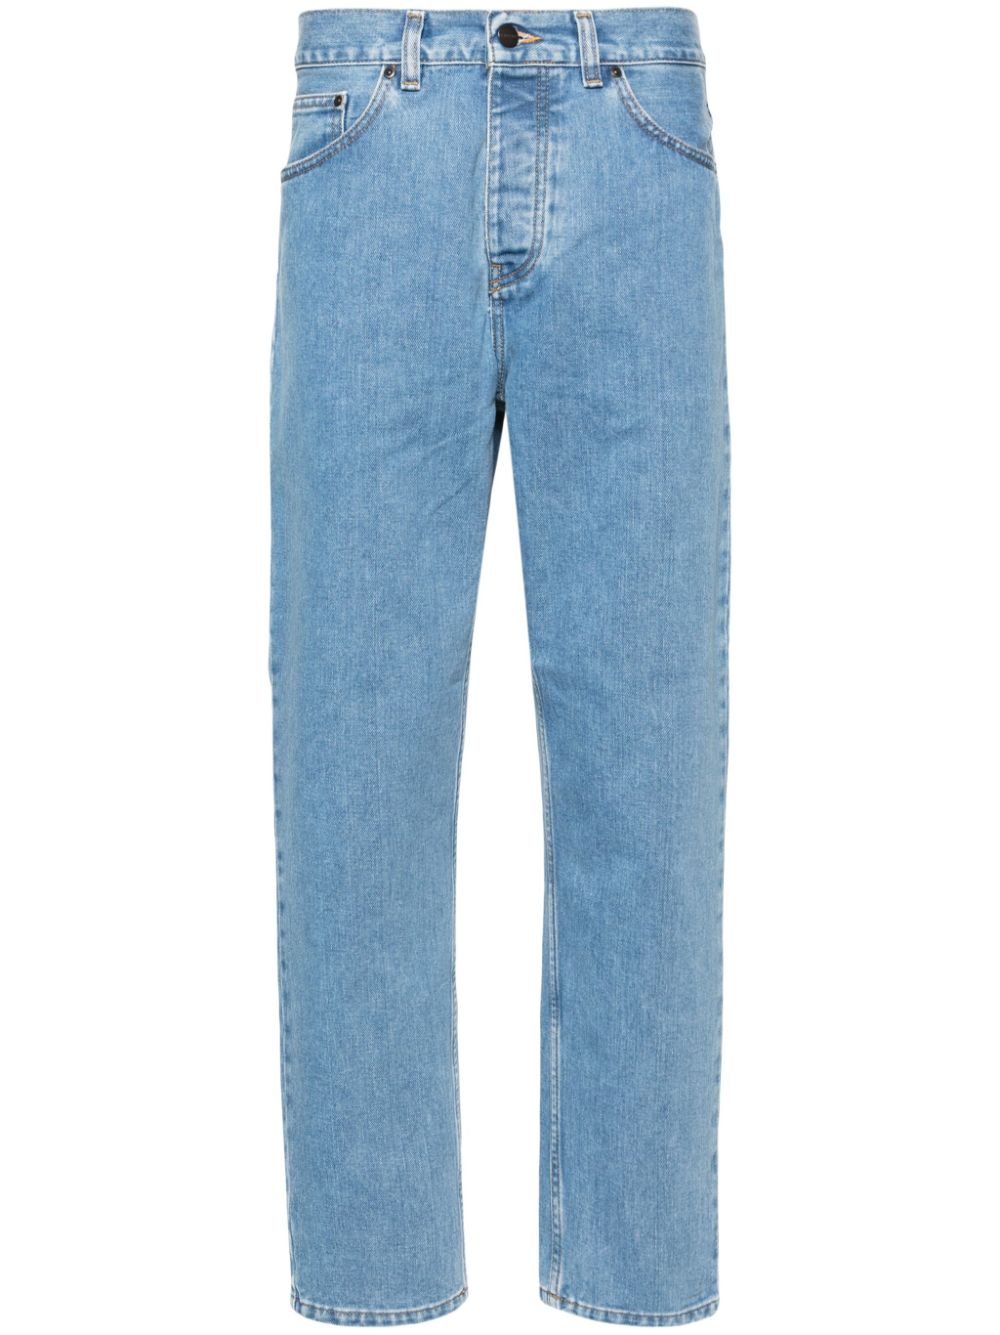 Carhartt WIP Newell mid-rise tapered jeans - Blue von Carhartt WIP